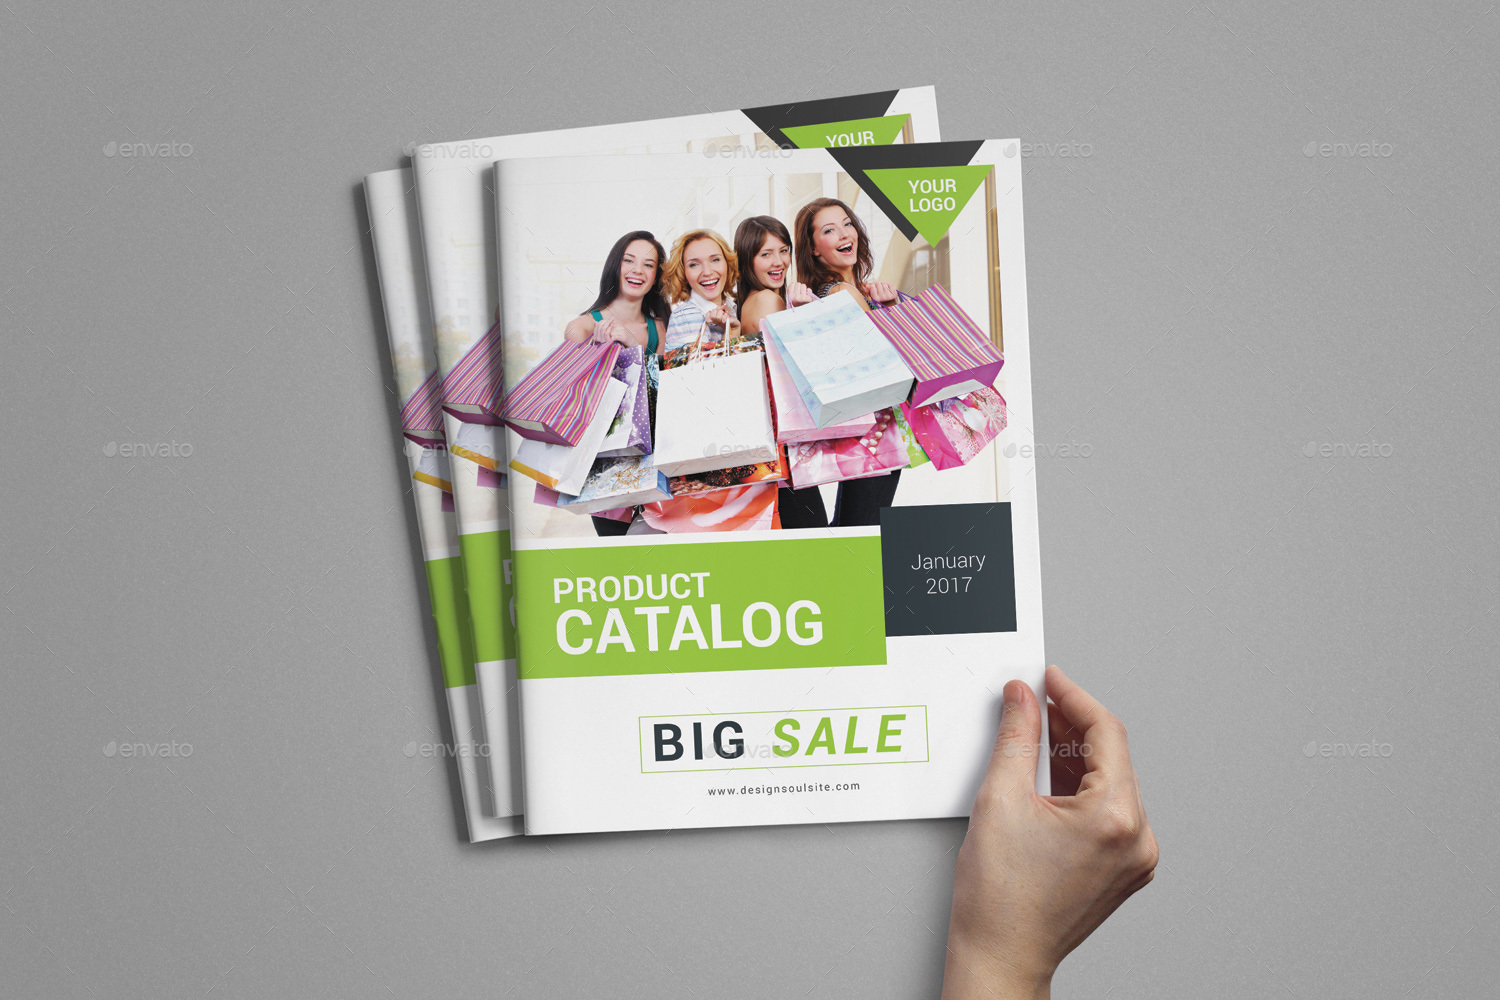 Game promo catalog. Иллюстративного каталога. Каталог big. Catalogue t. Promo catalogue.